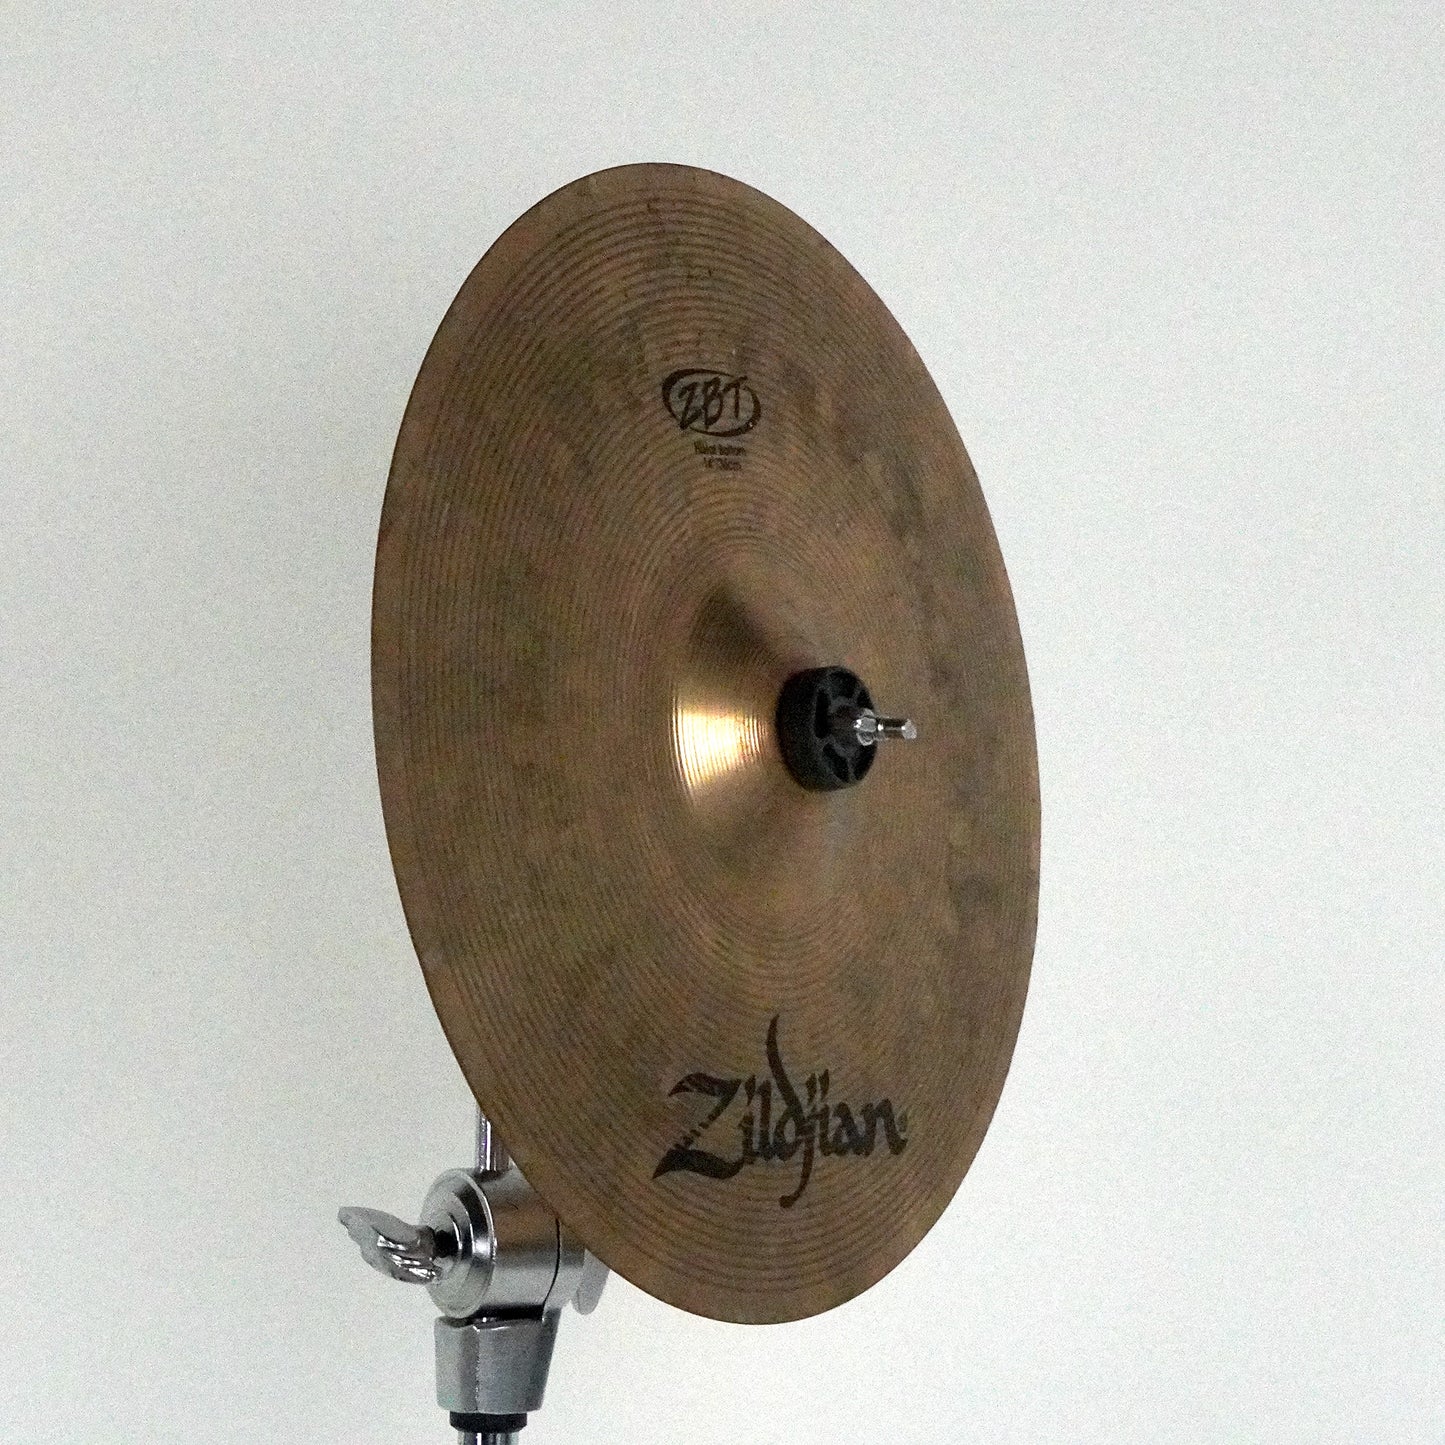 Zildjian 14” ZBT Bottom Hi-hat